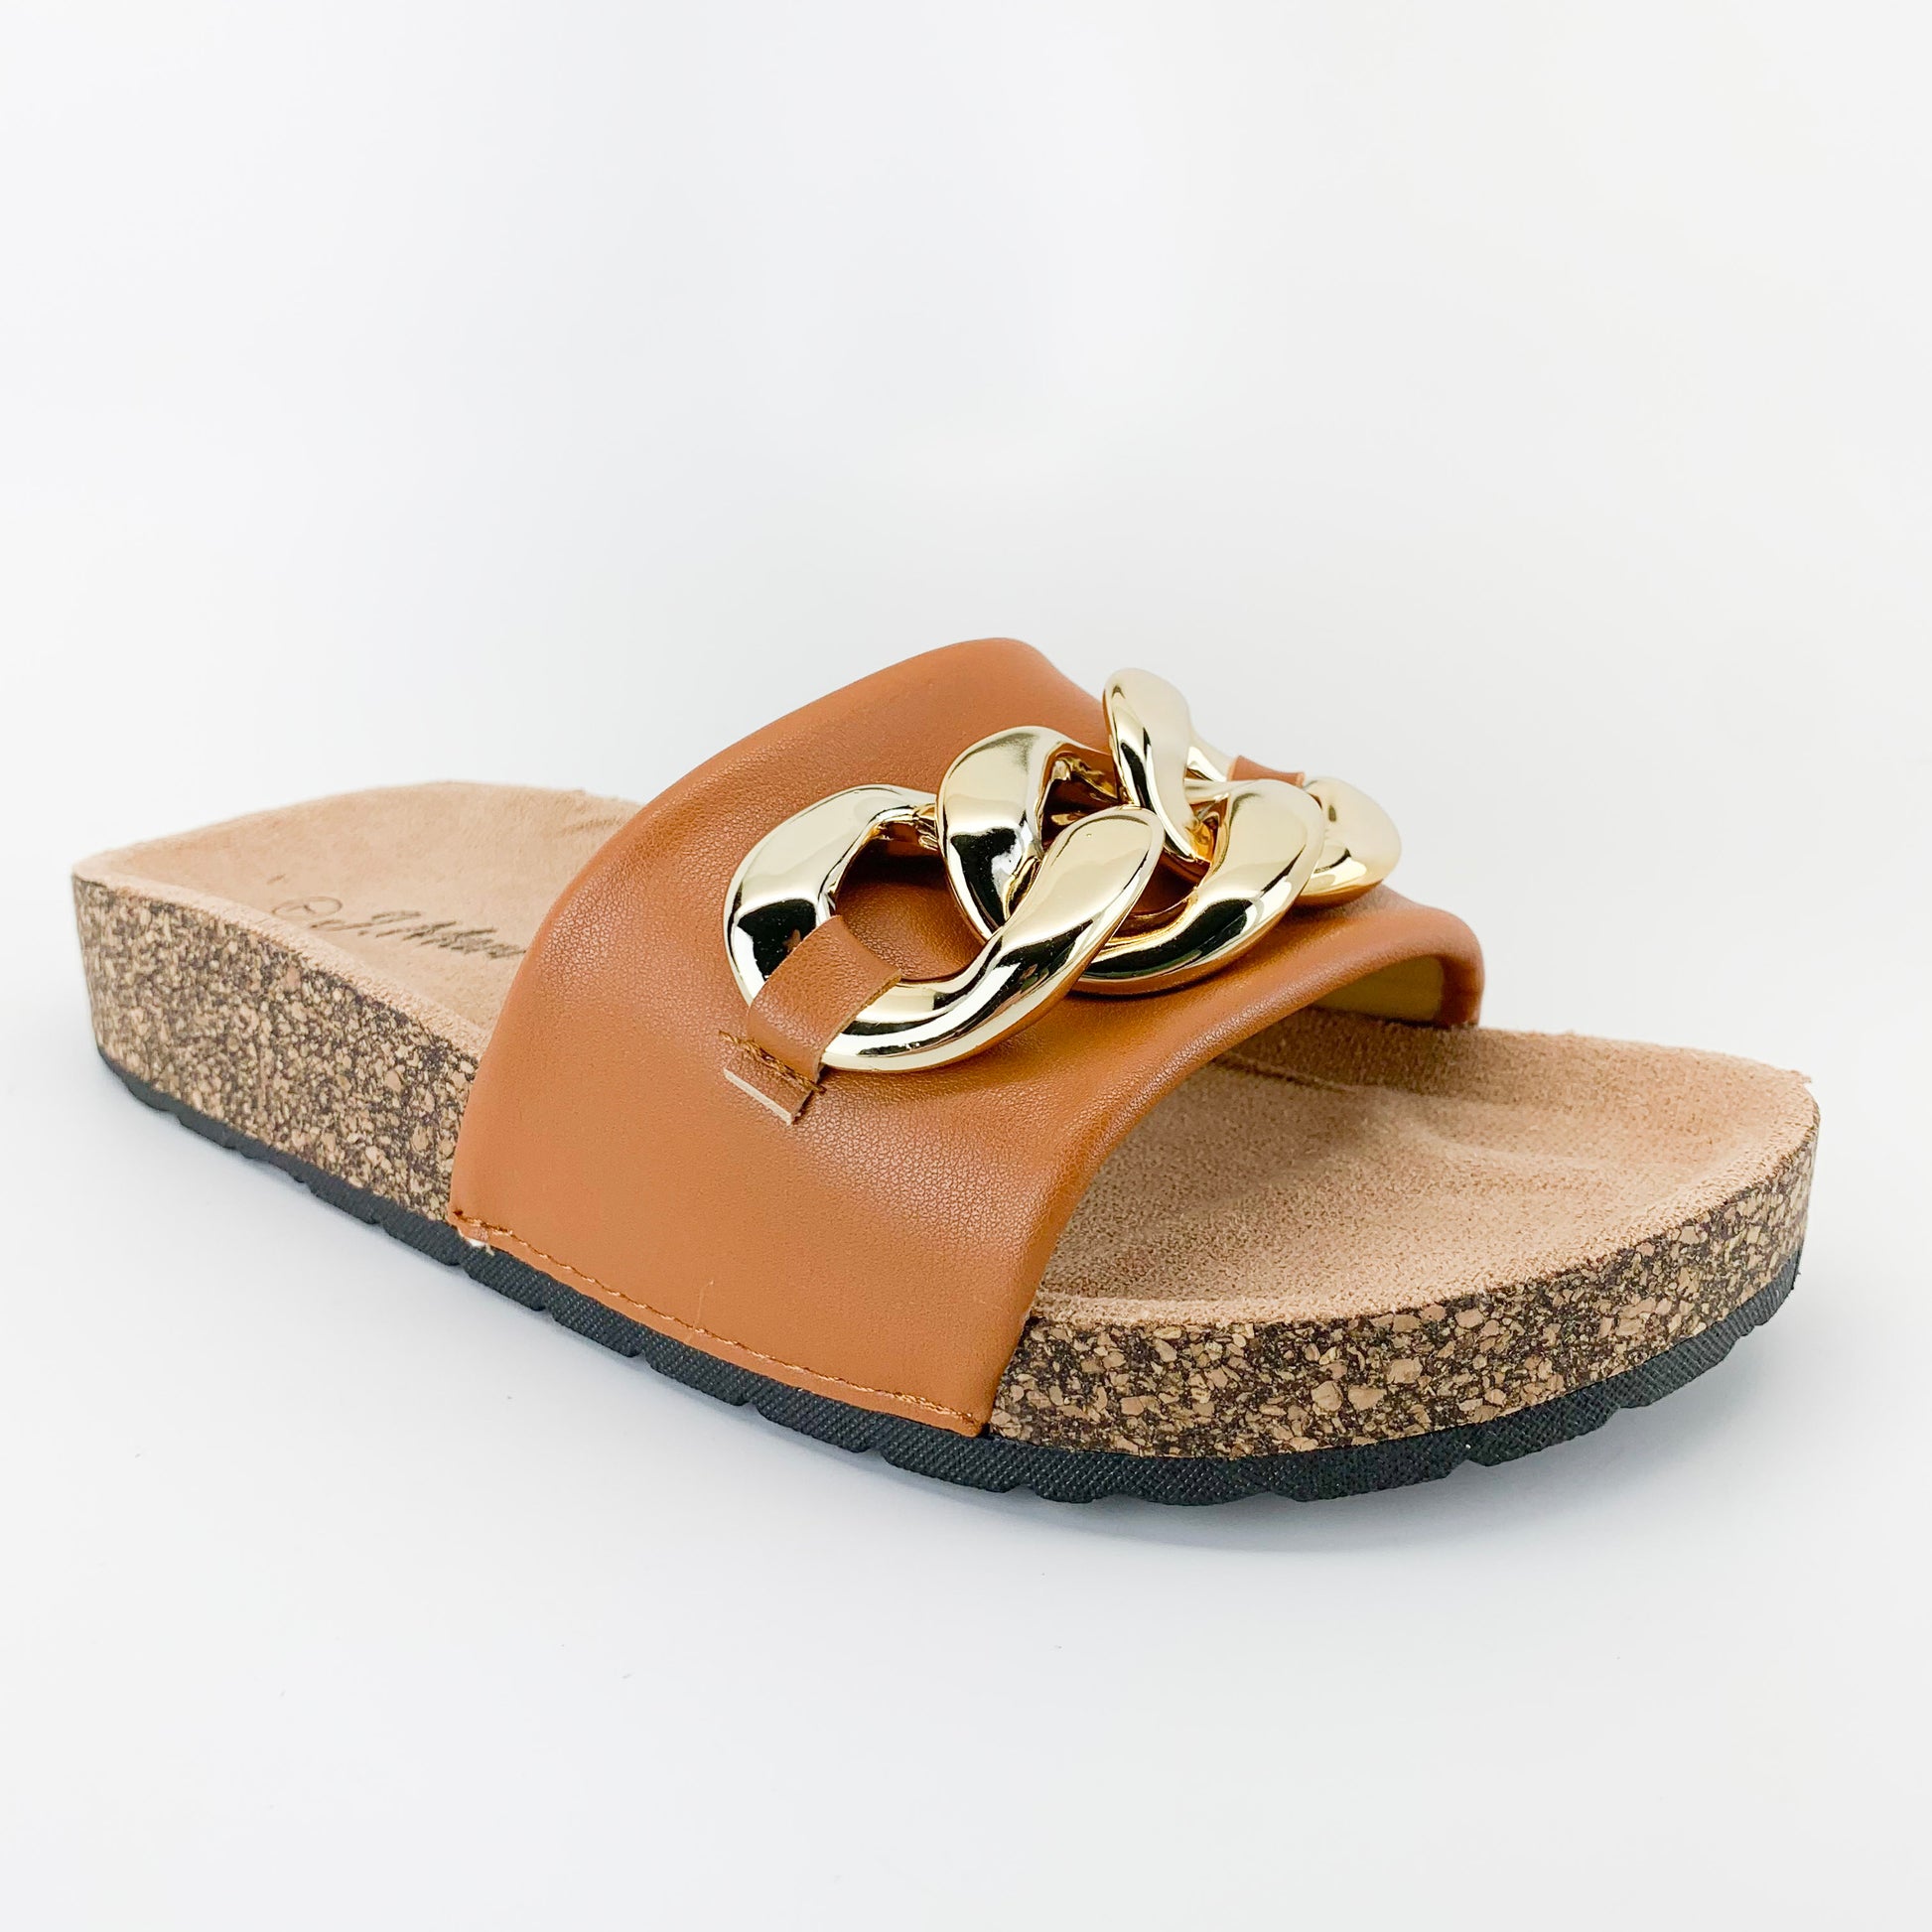 j.mark urban-34 tan sandal with chain